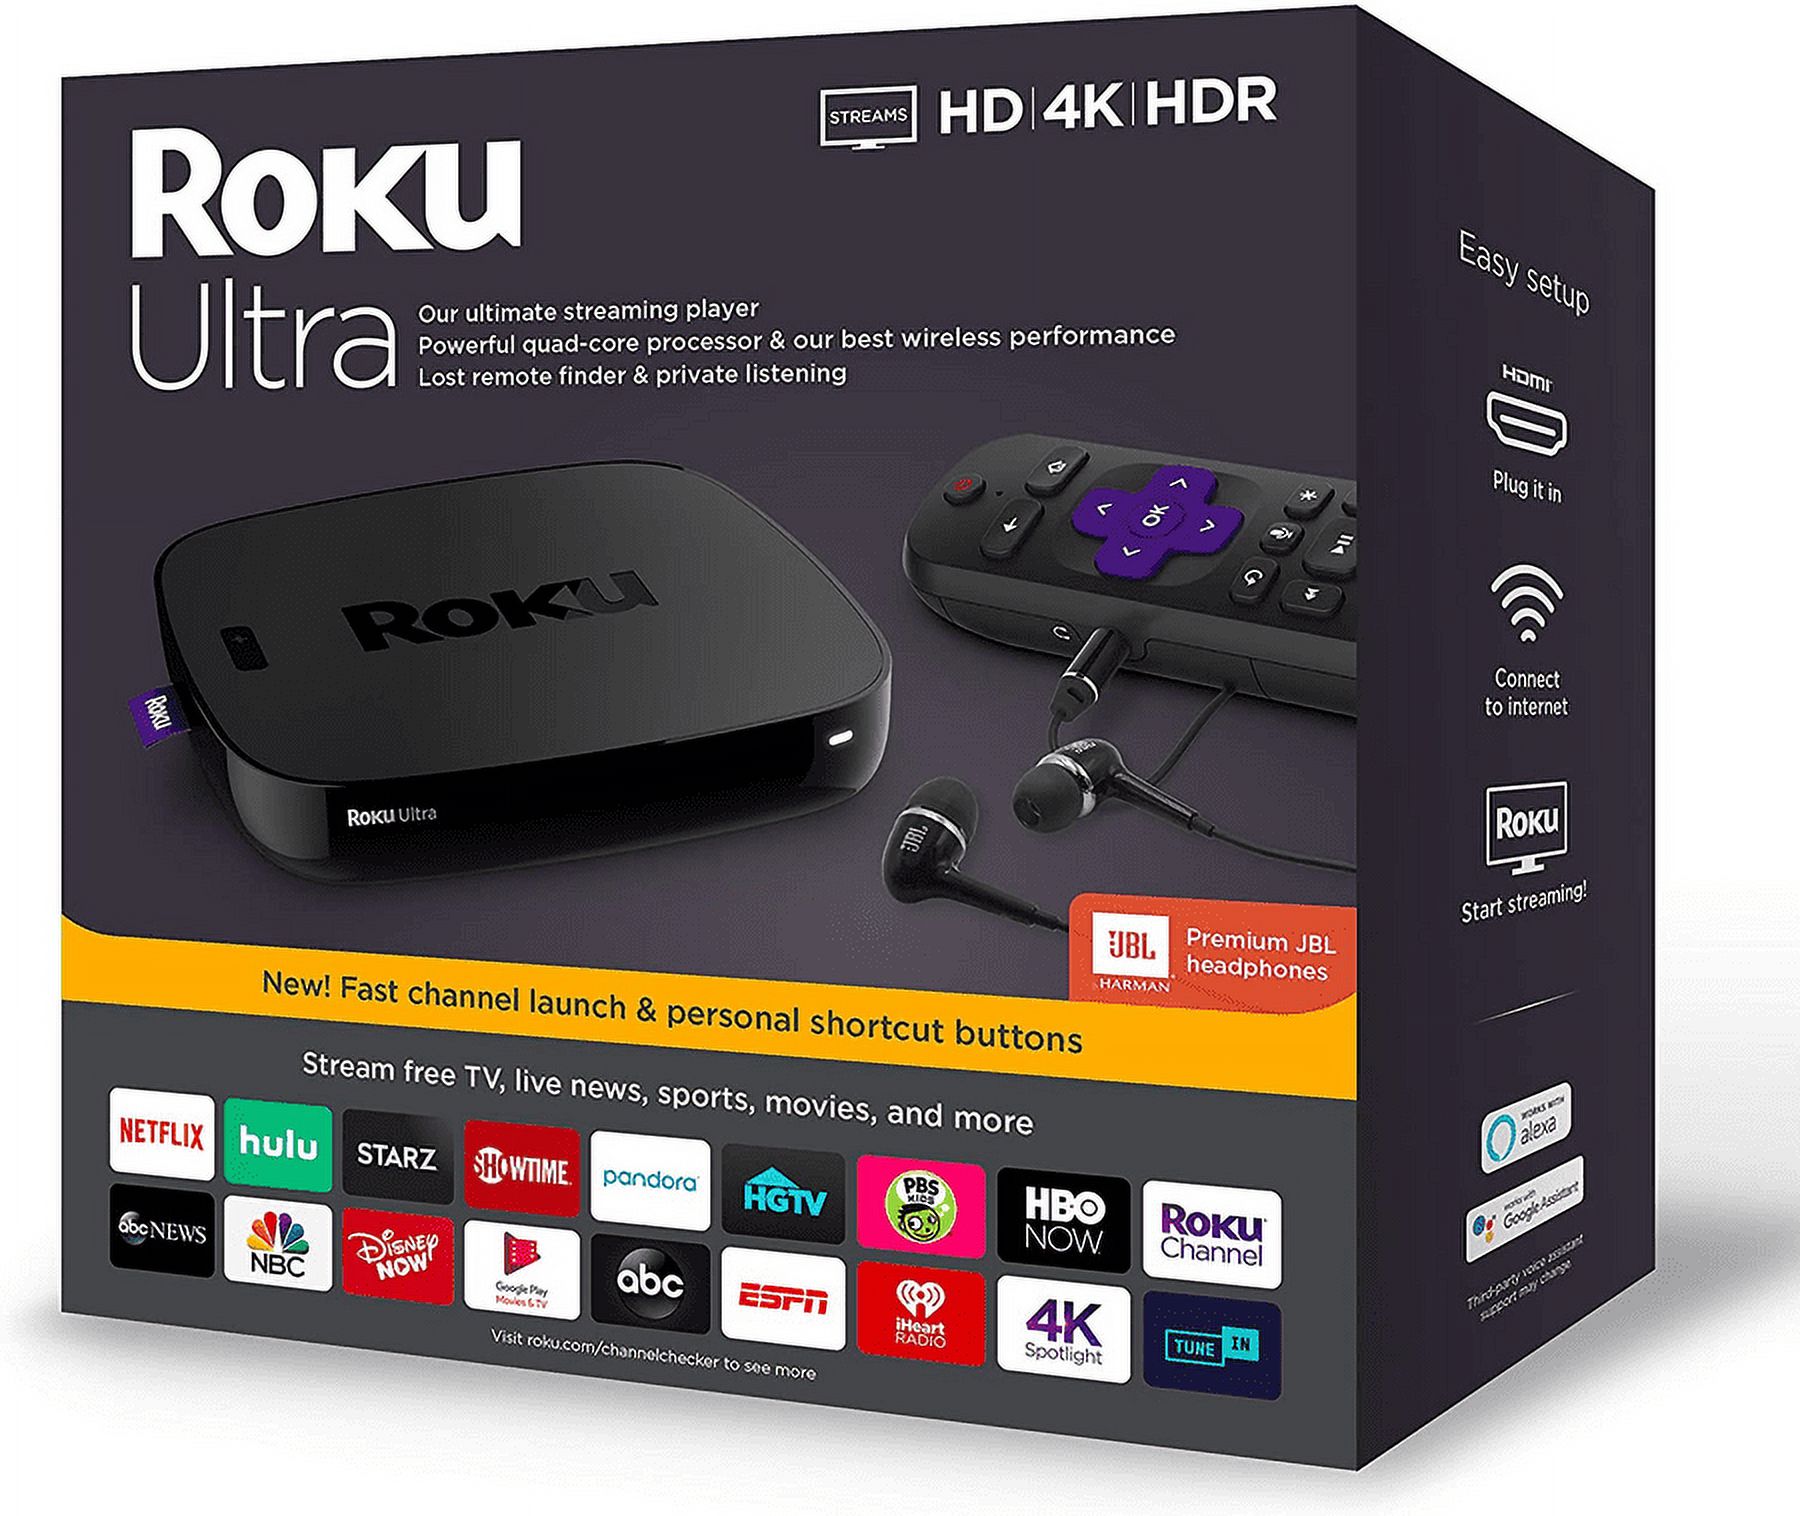 Roku Ultra Streaming Media Player 4K/HD/HDR with Premium JBL Headphones 2019 - image 1 of 7